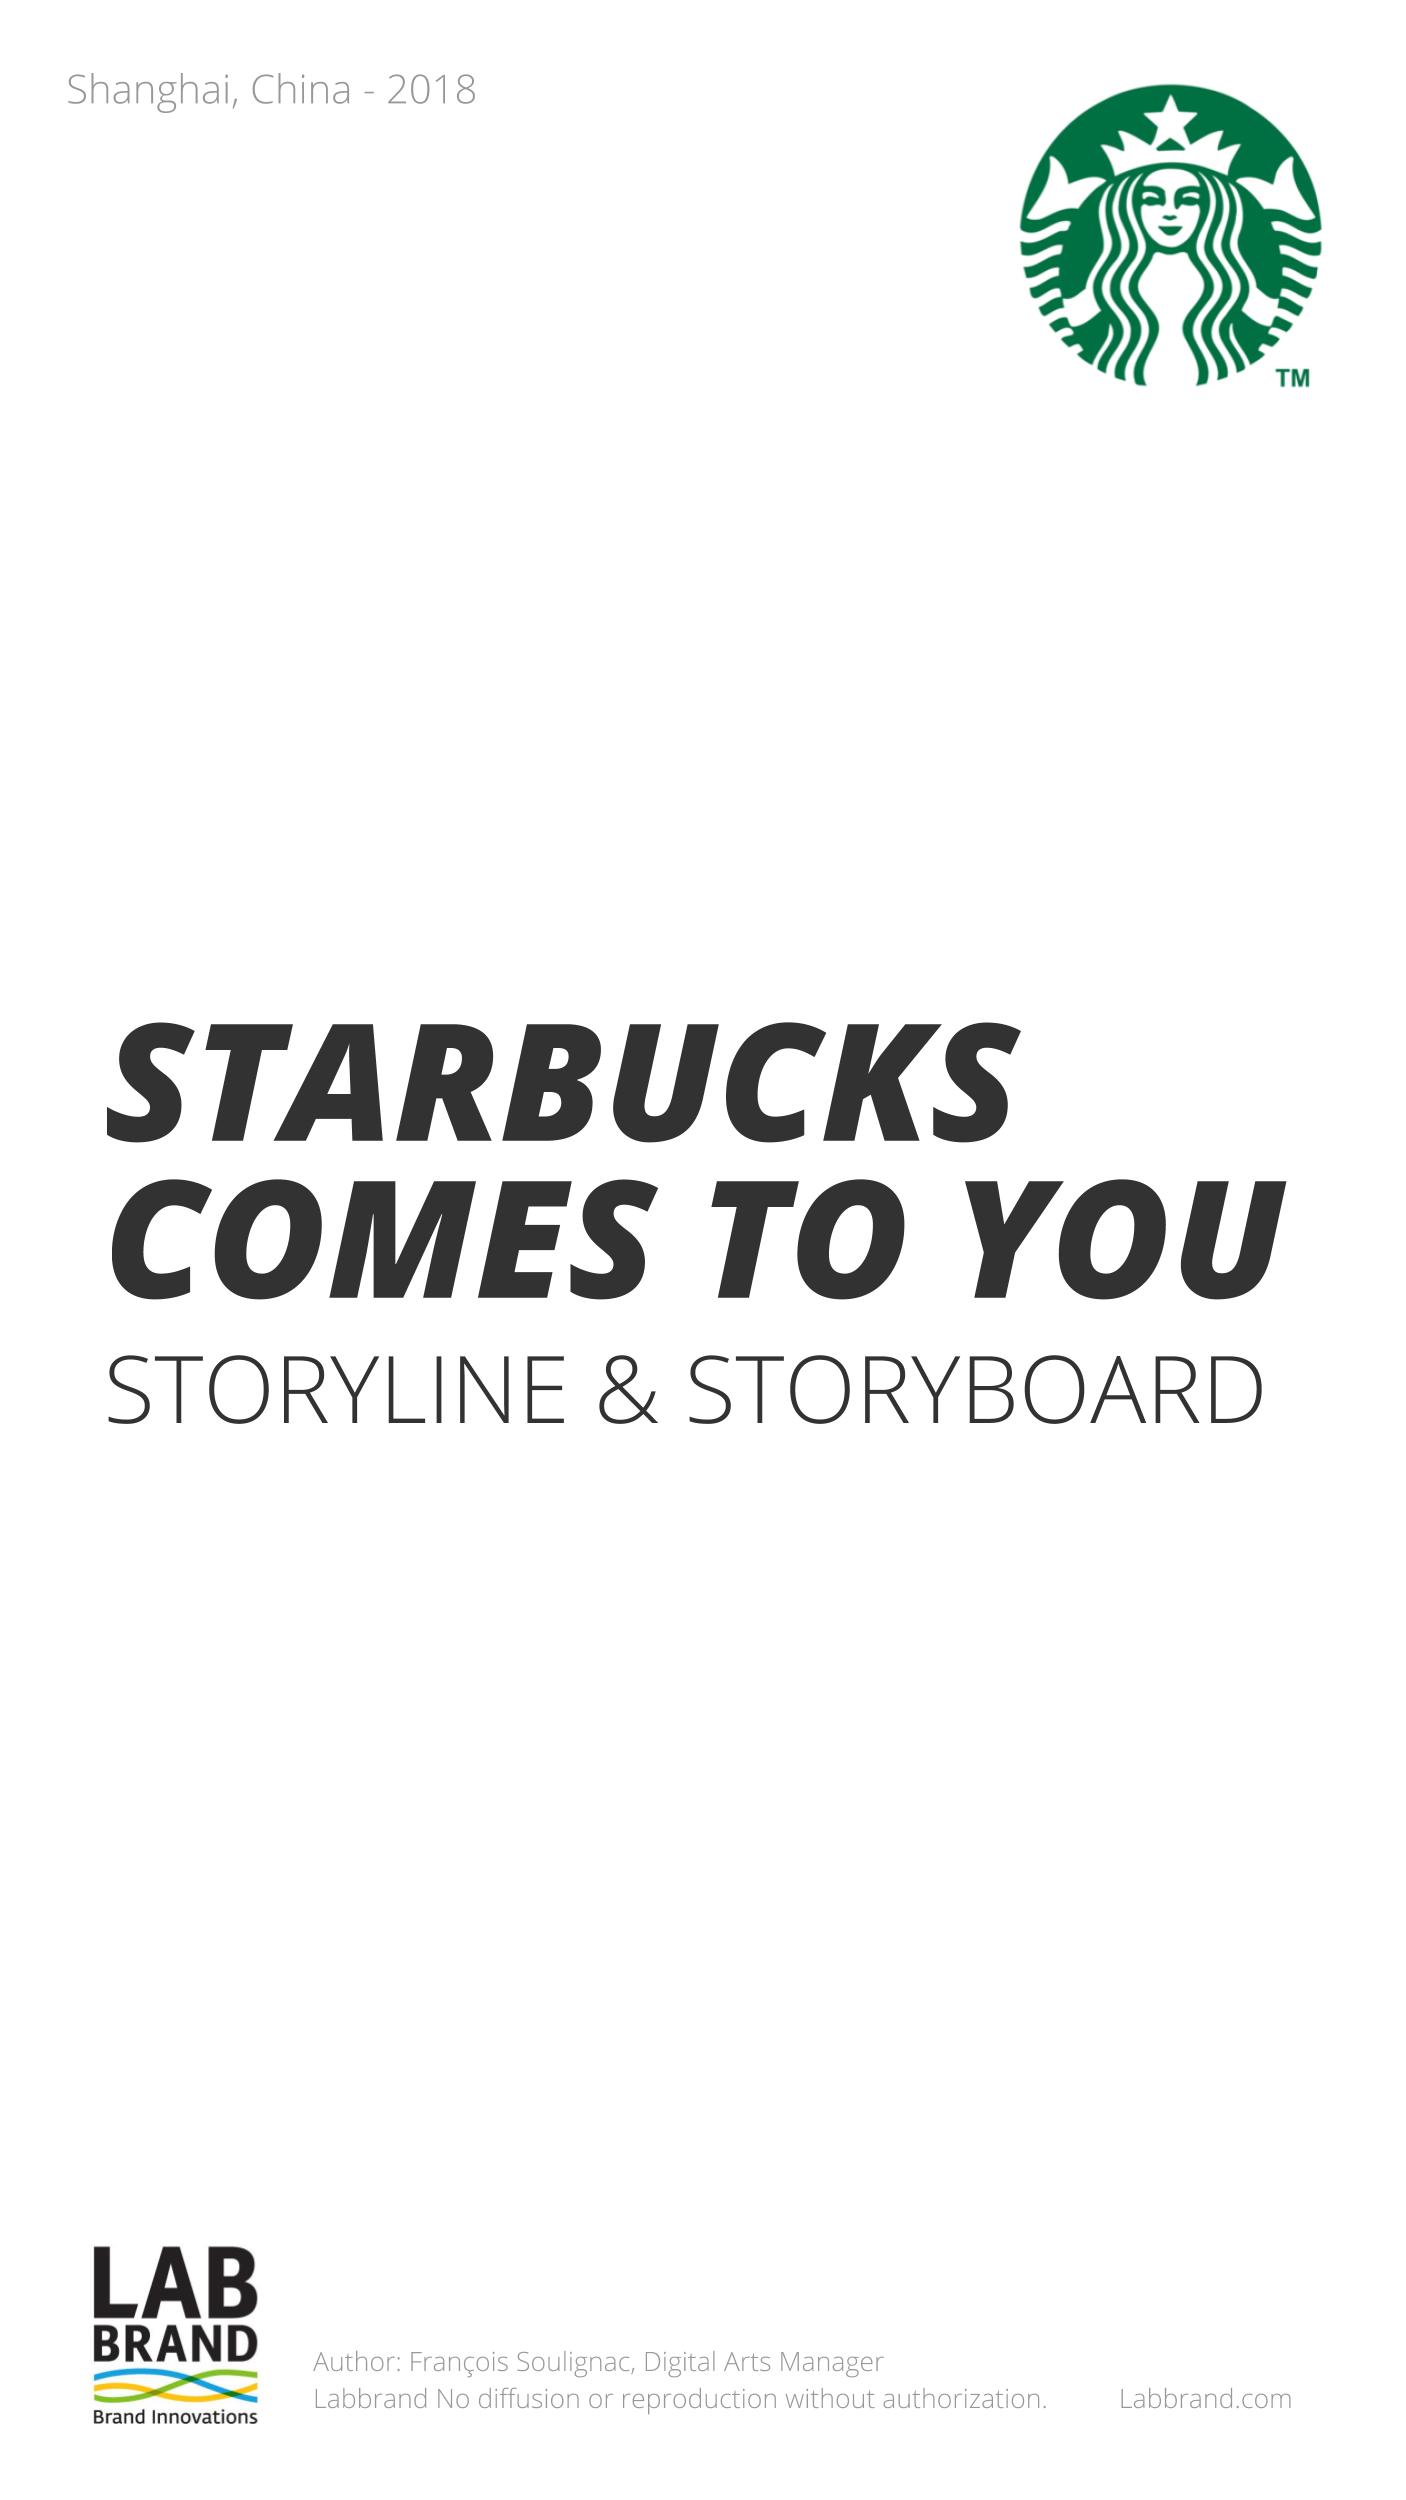 Starbucks China - Delivery Campaign - STORYBOARD TITLE PRESENTATION - Francois Soulignac - MADJOR Labbrand, Shanghai